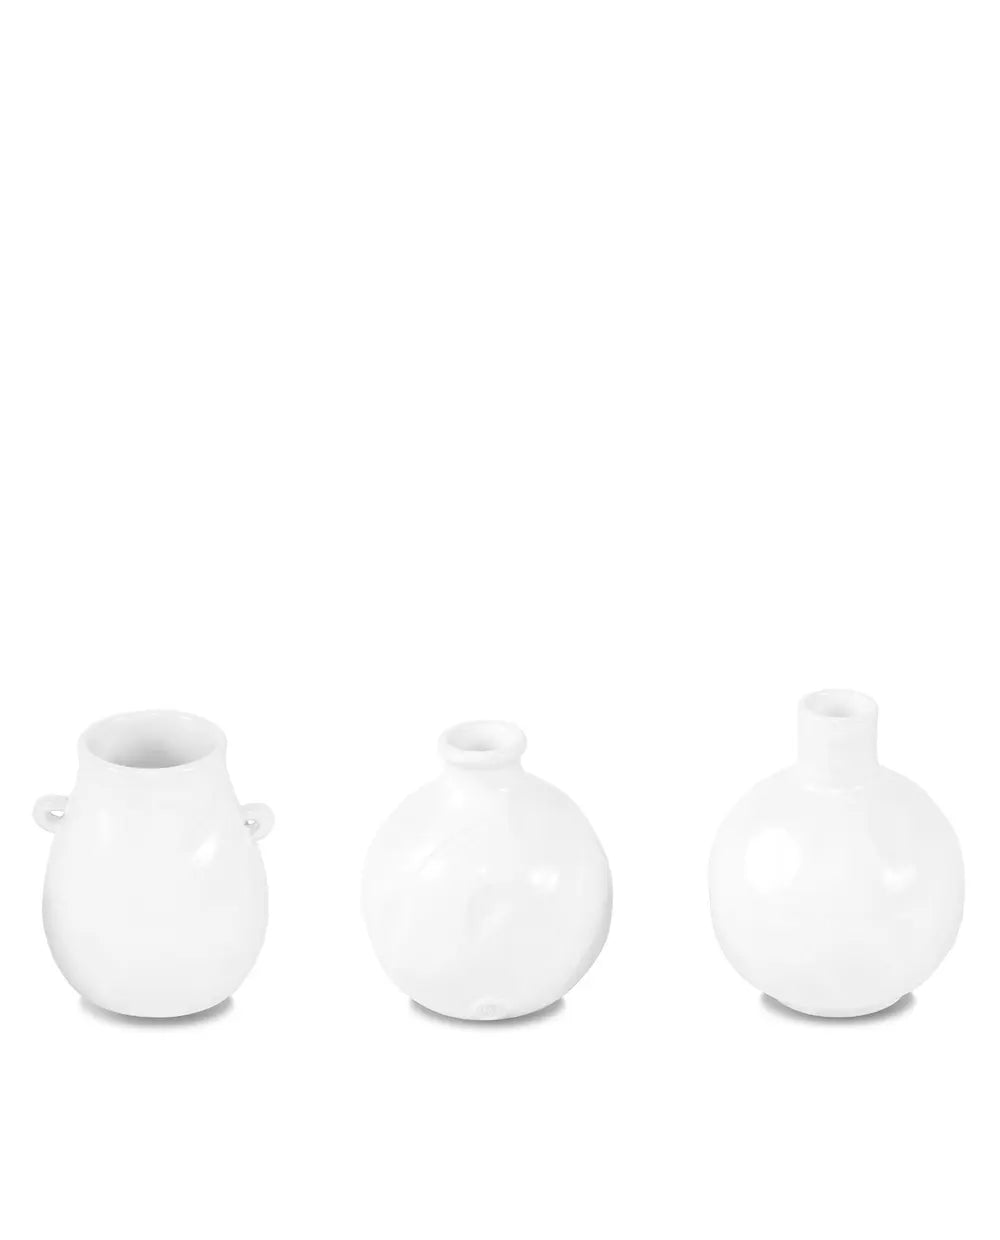 Vase No. 950, Set of 3